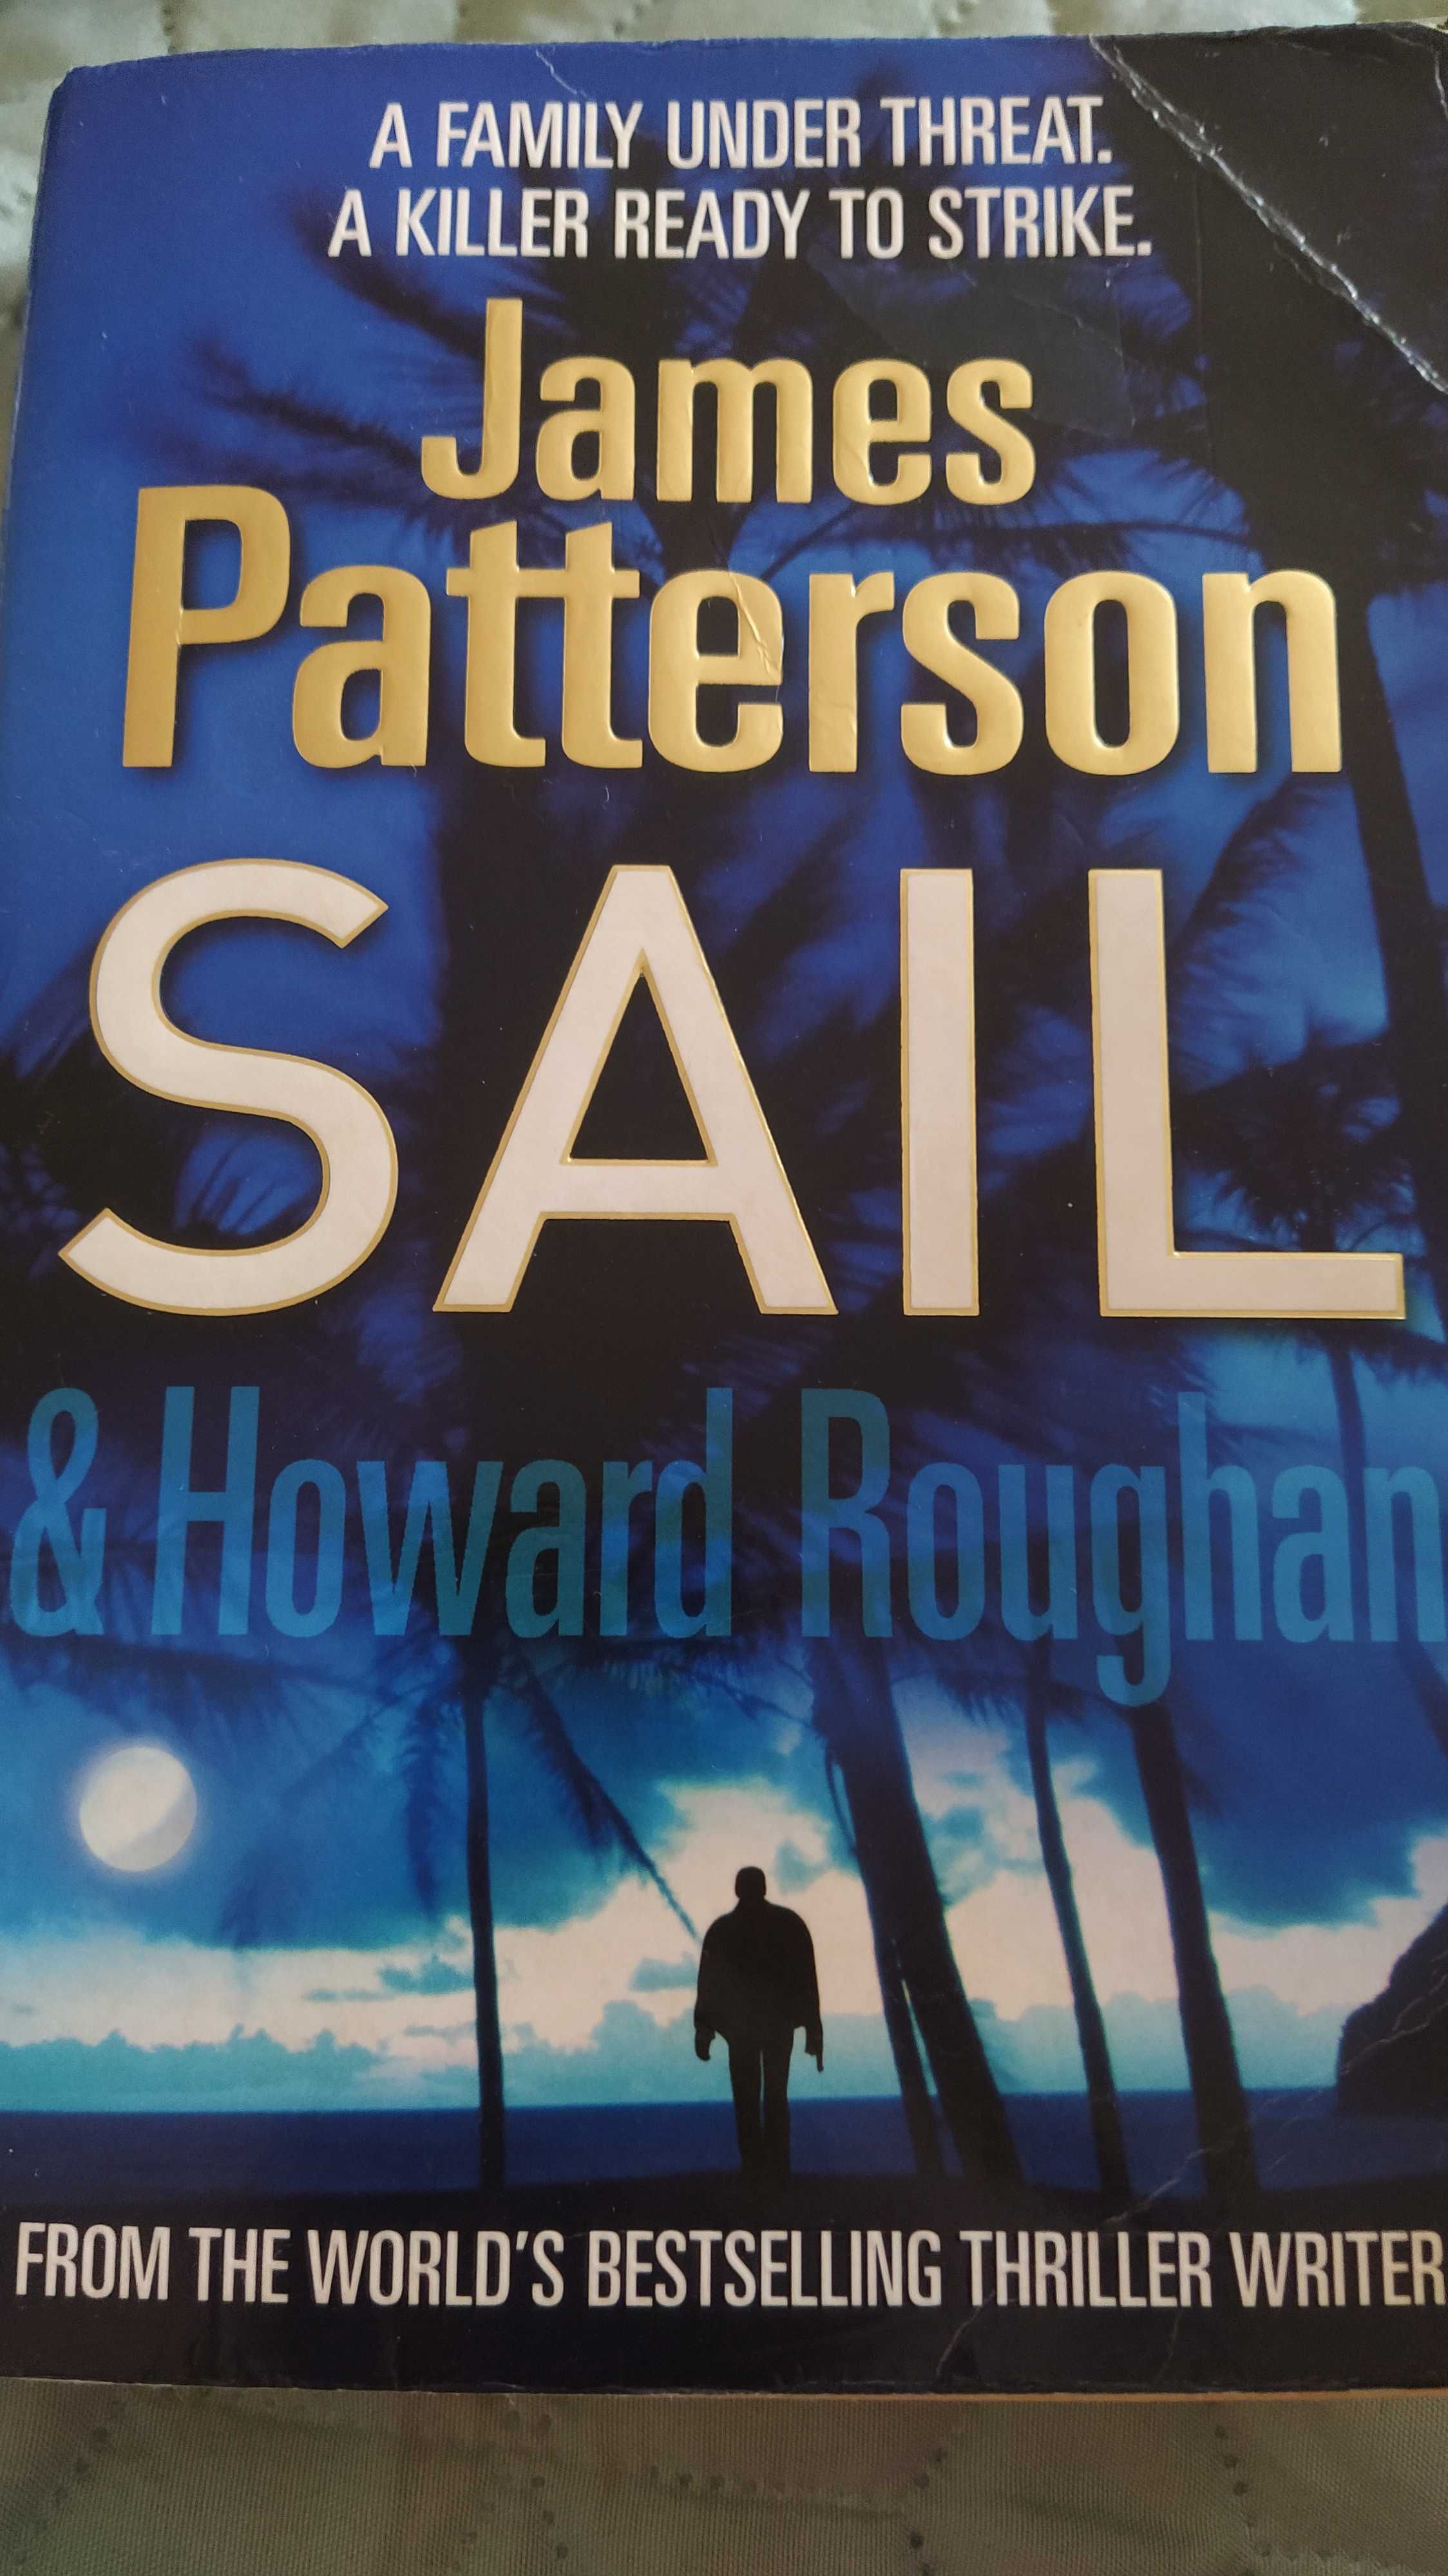 SAIL - James Patterson & Howard Roughan book